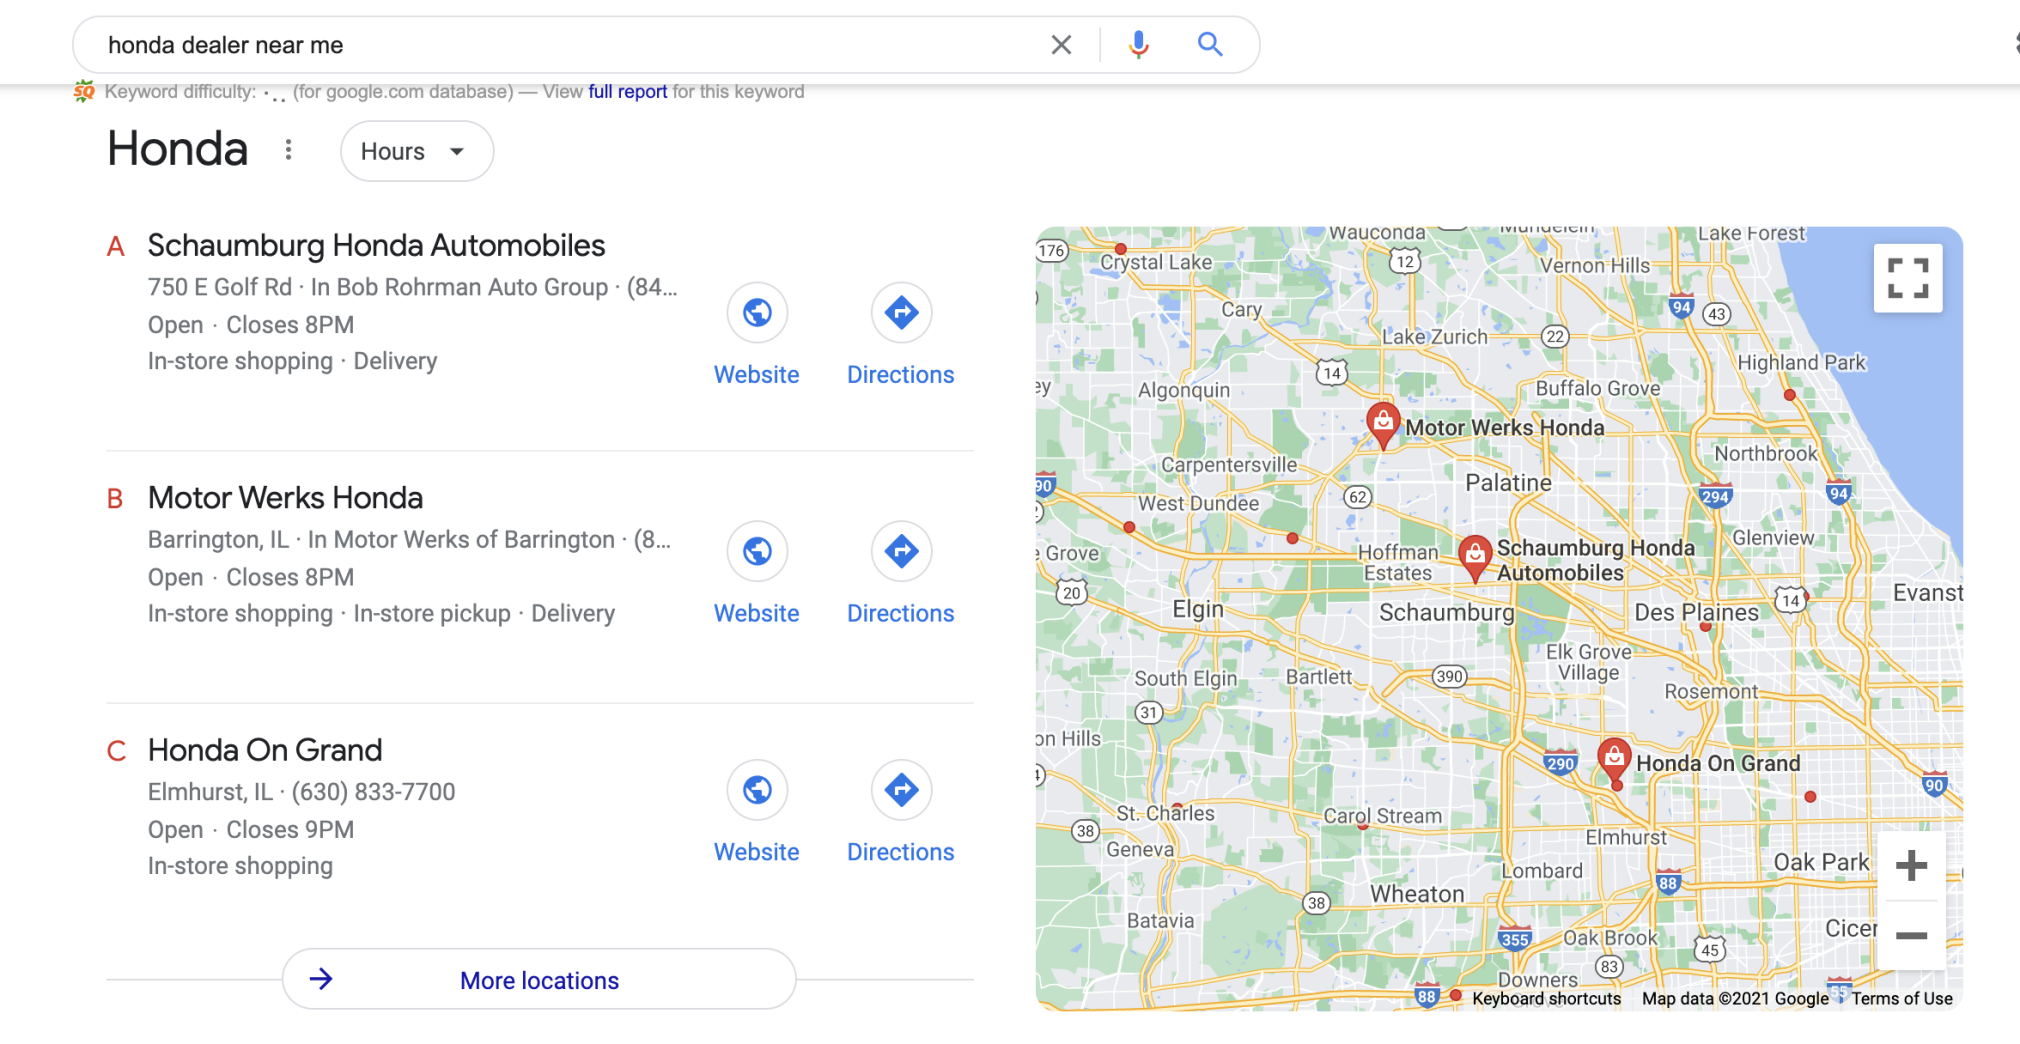 Honda dealer local search result